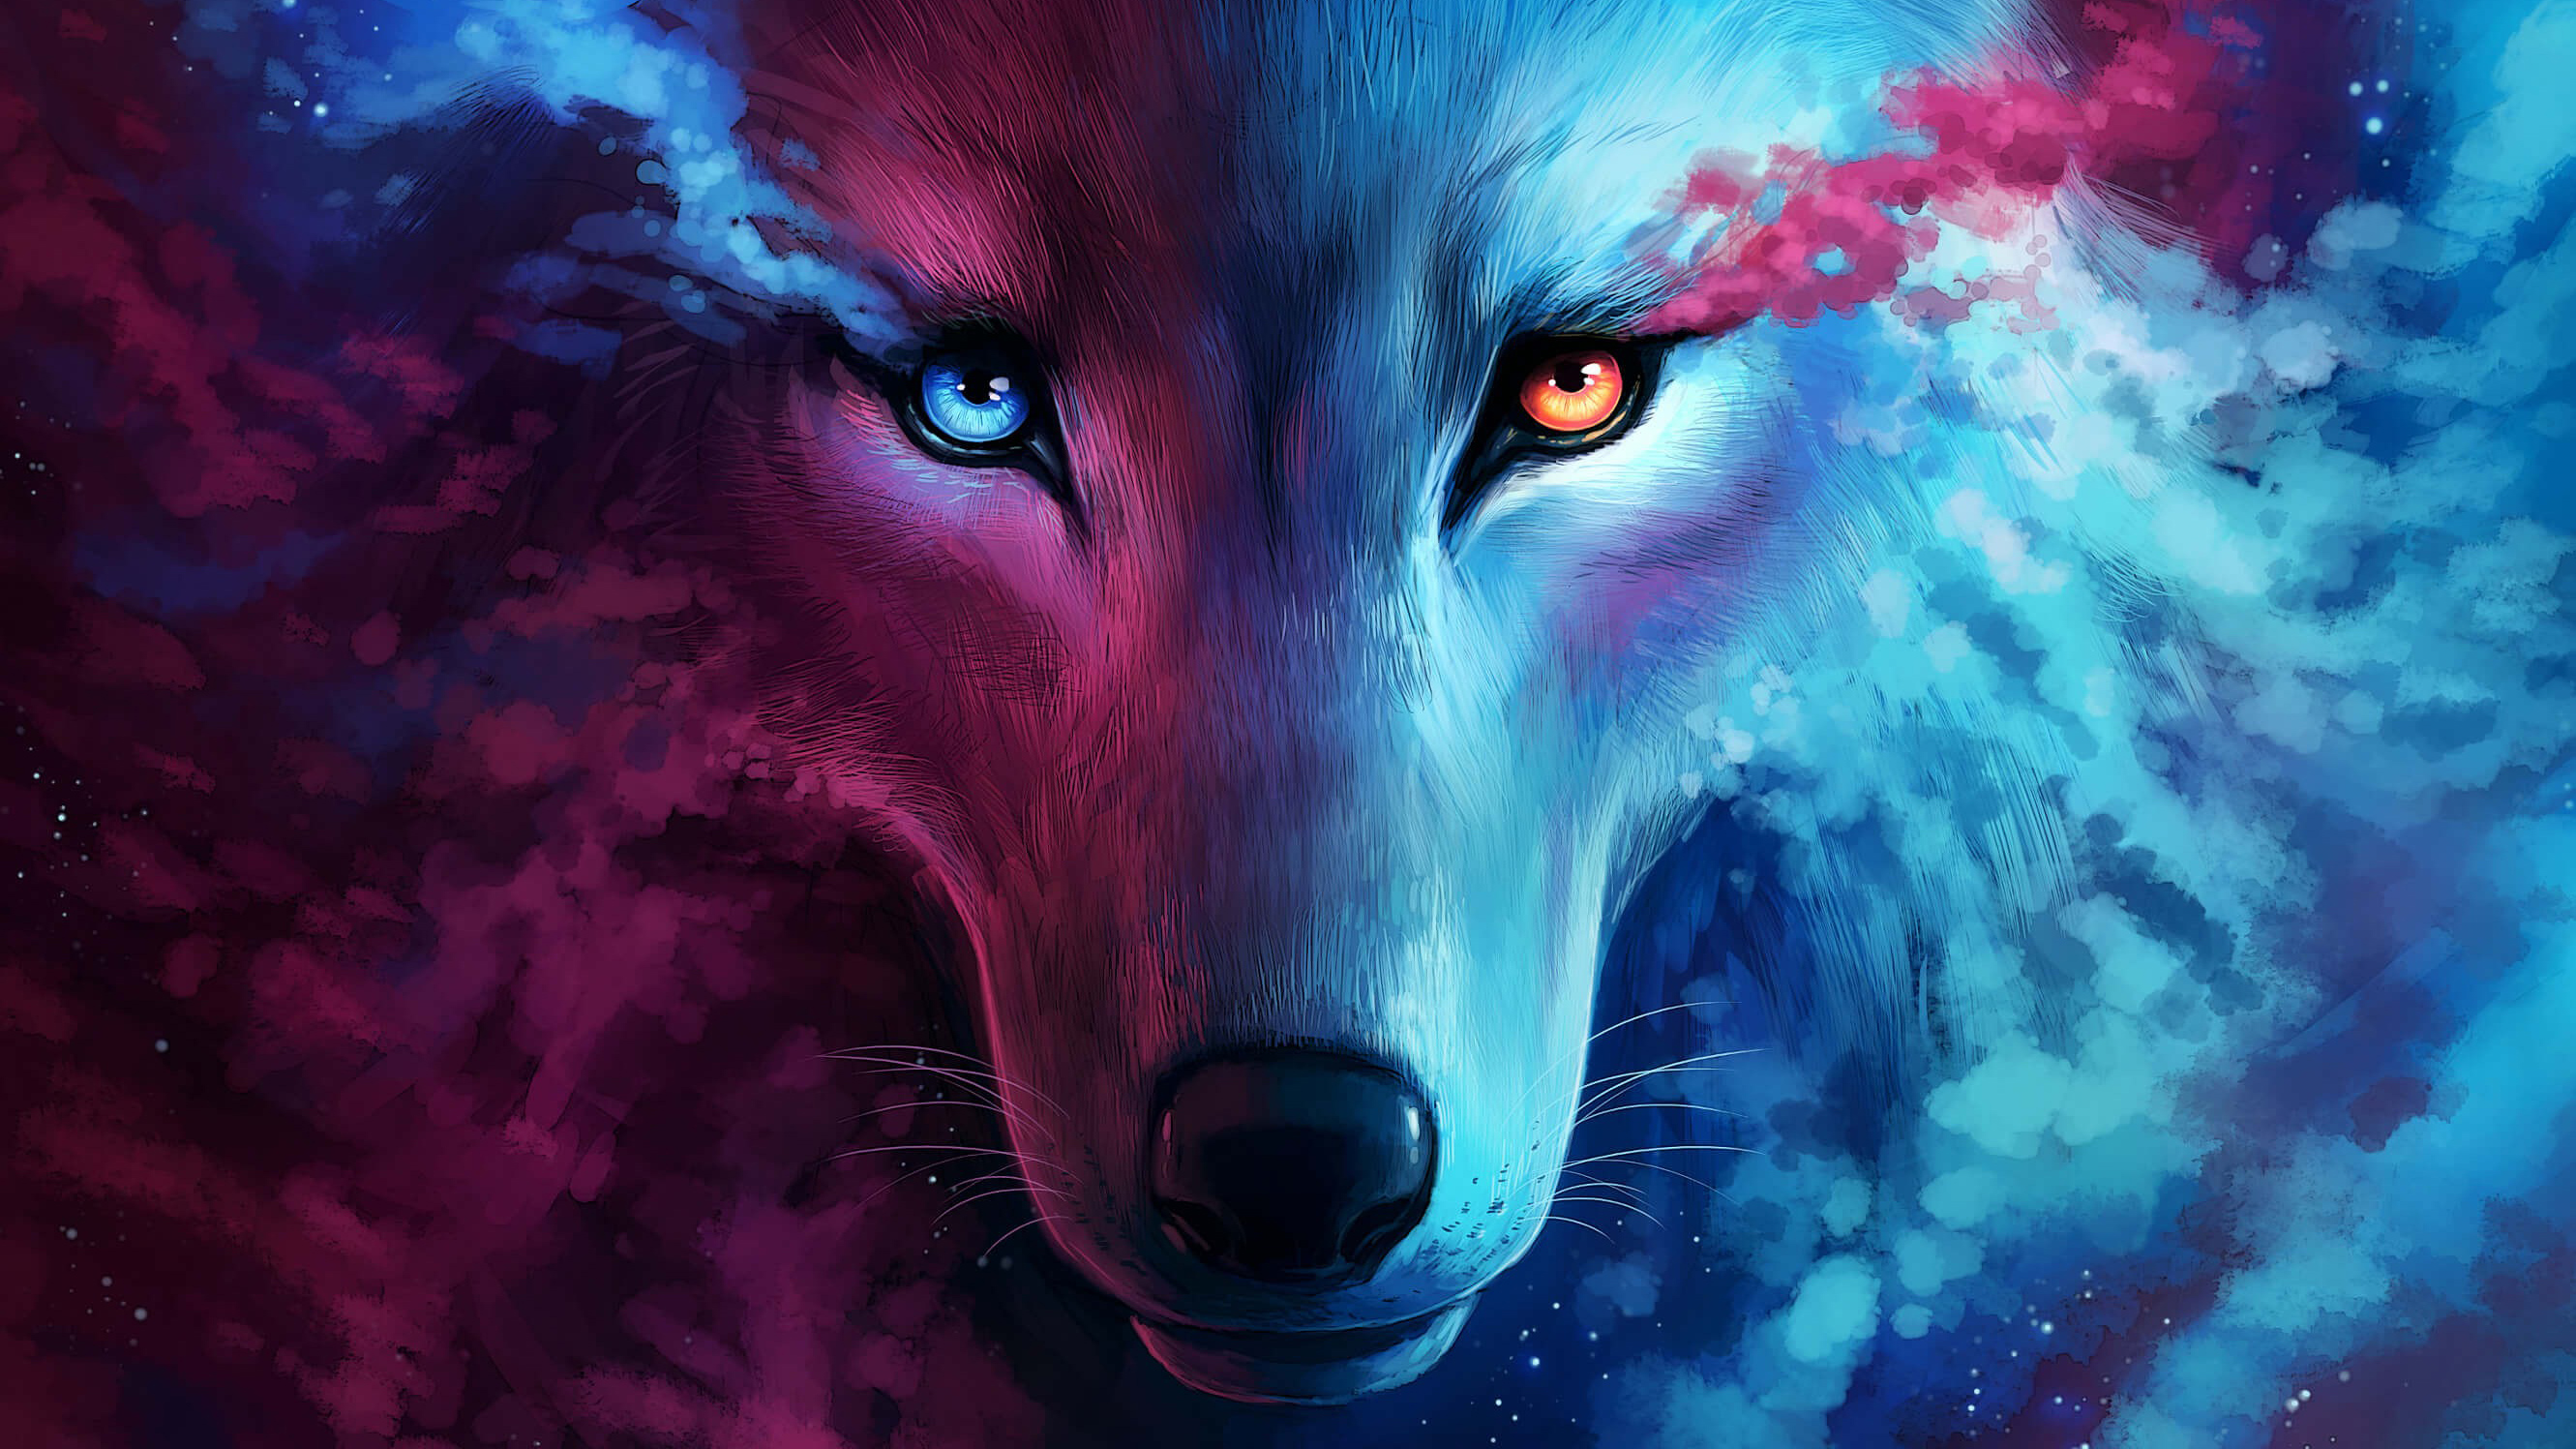 The Galaxy Wolf, HD Artist, 4k Wallpaper, Image